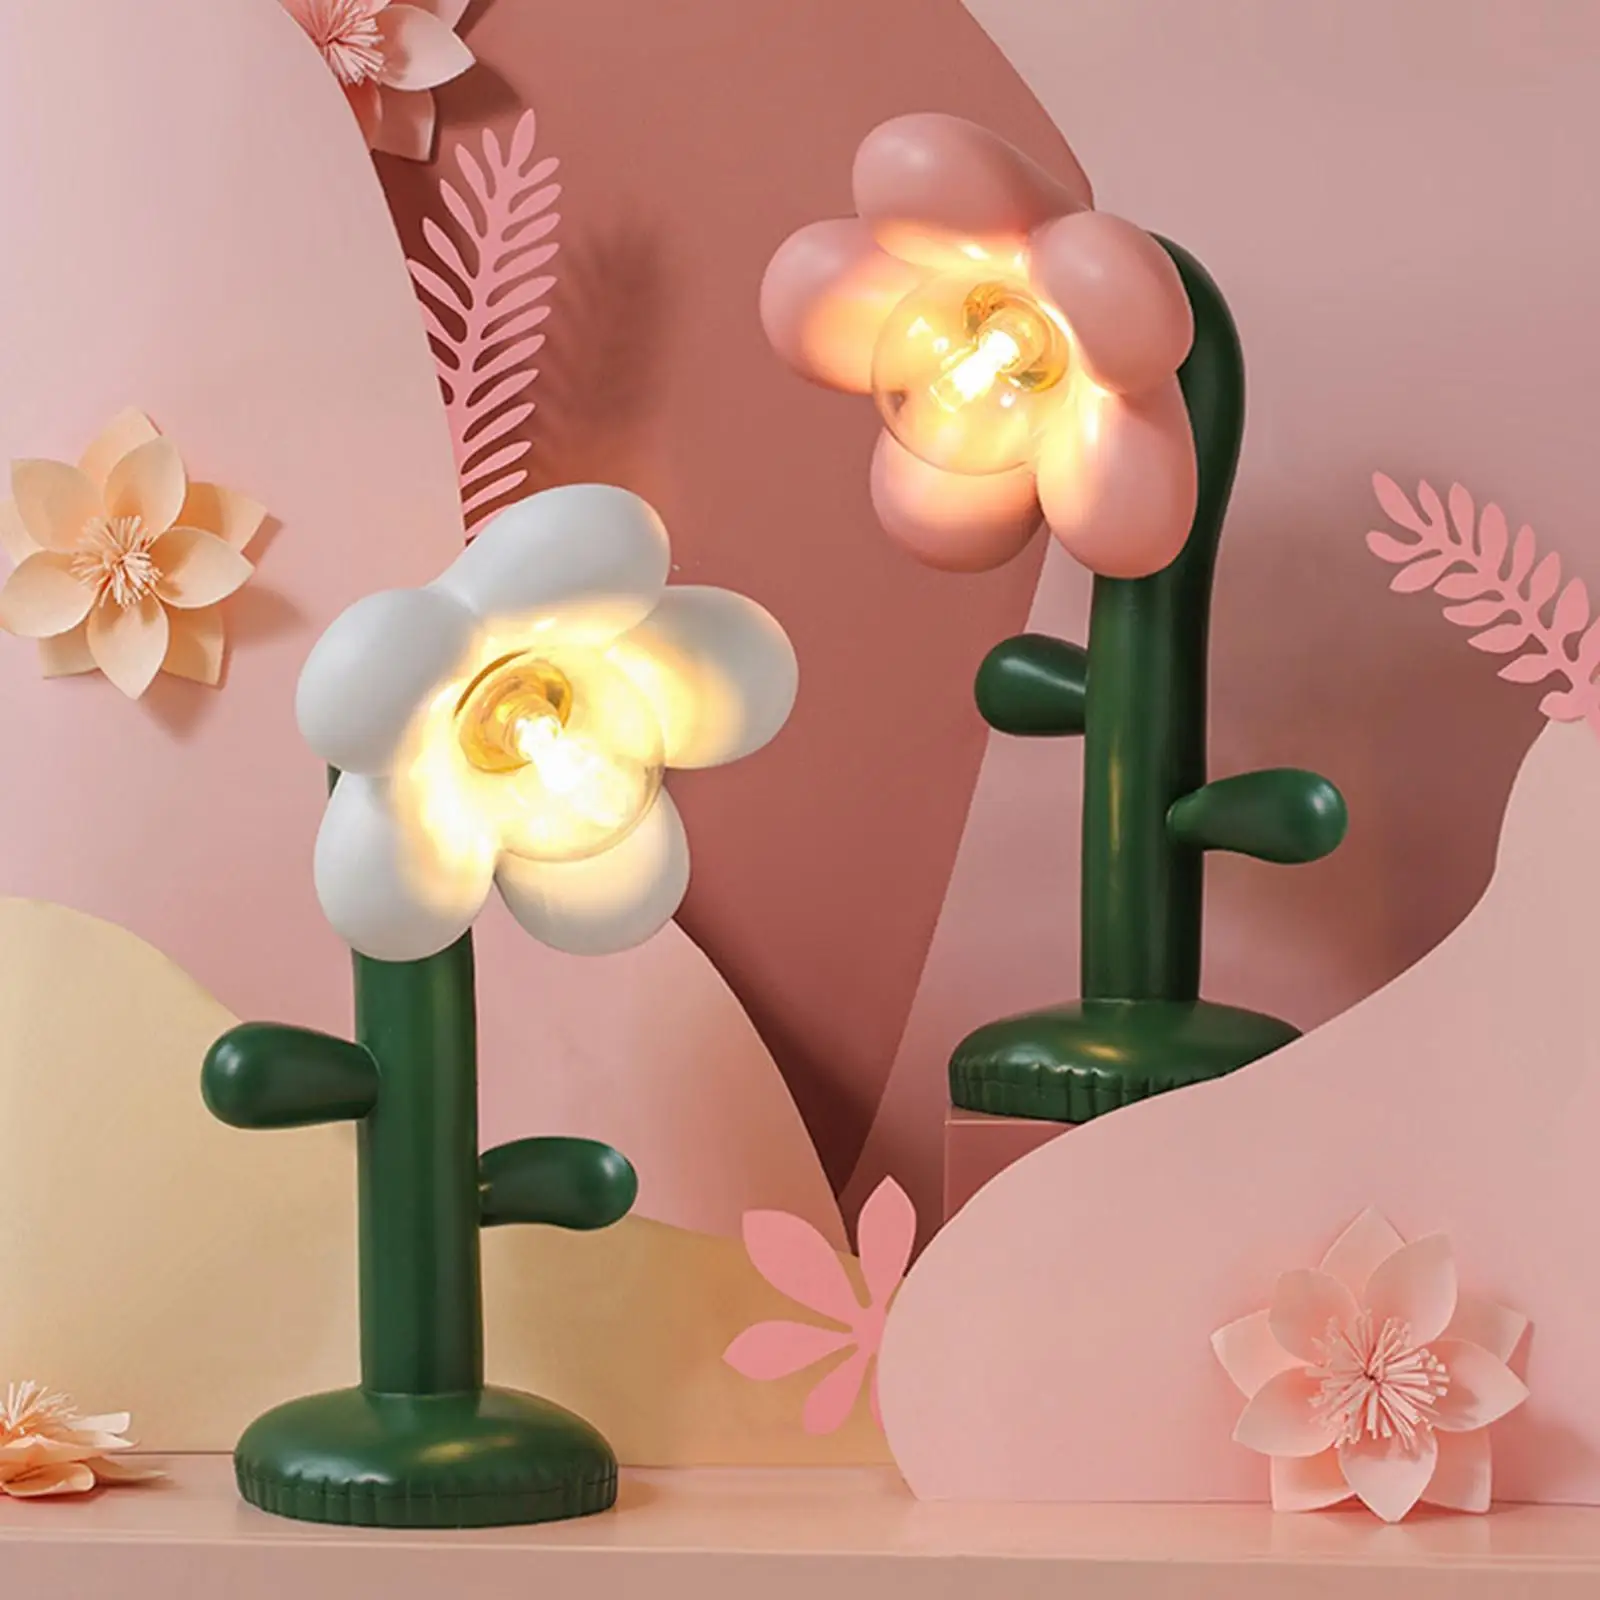 NightStand Lamps Flower Lamp Decor Desk Light Lamp for Bedside Bathroom Cafe